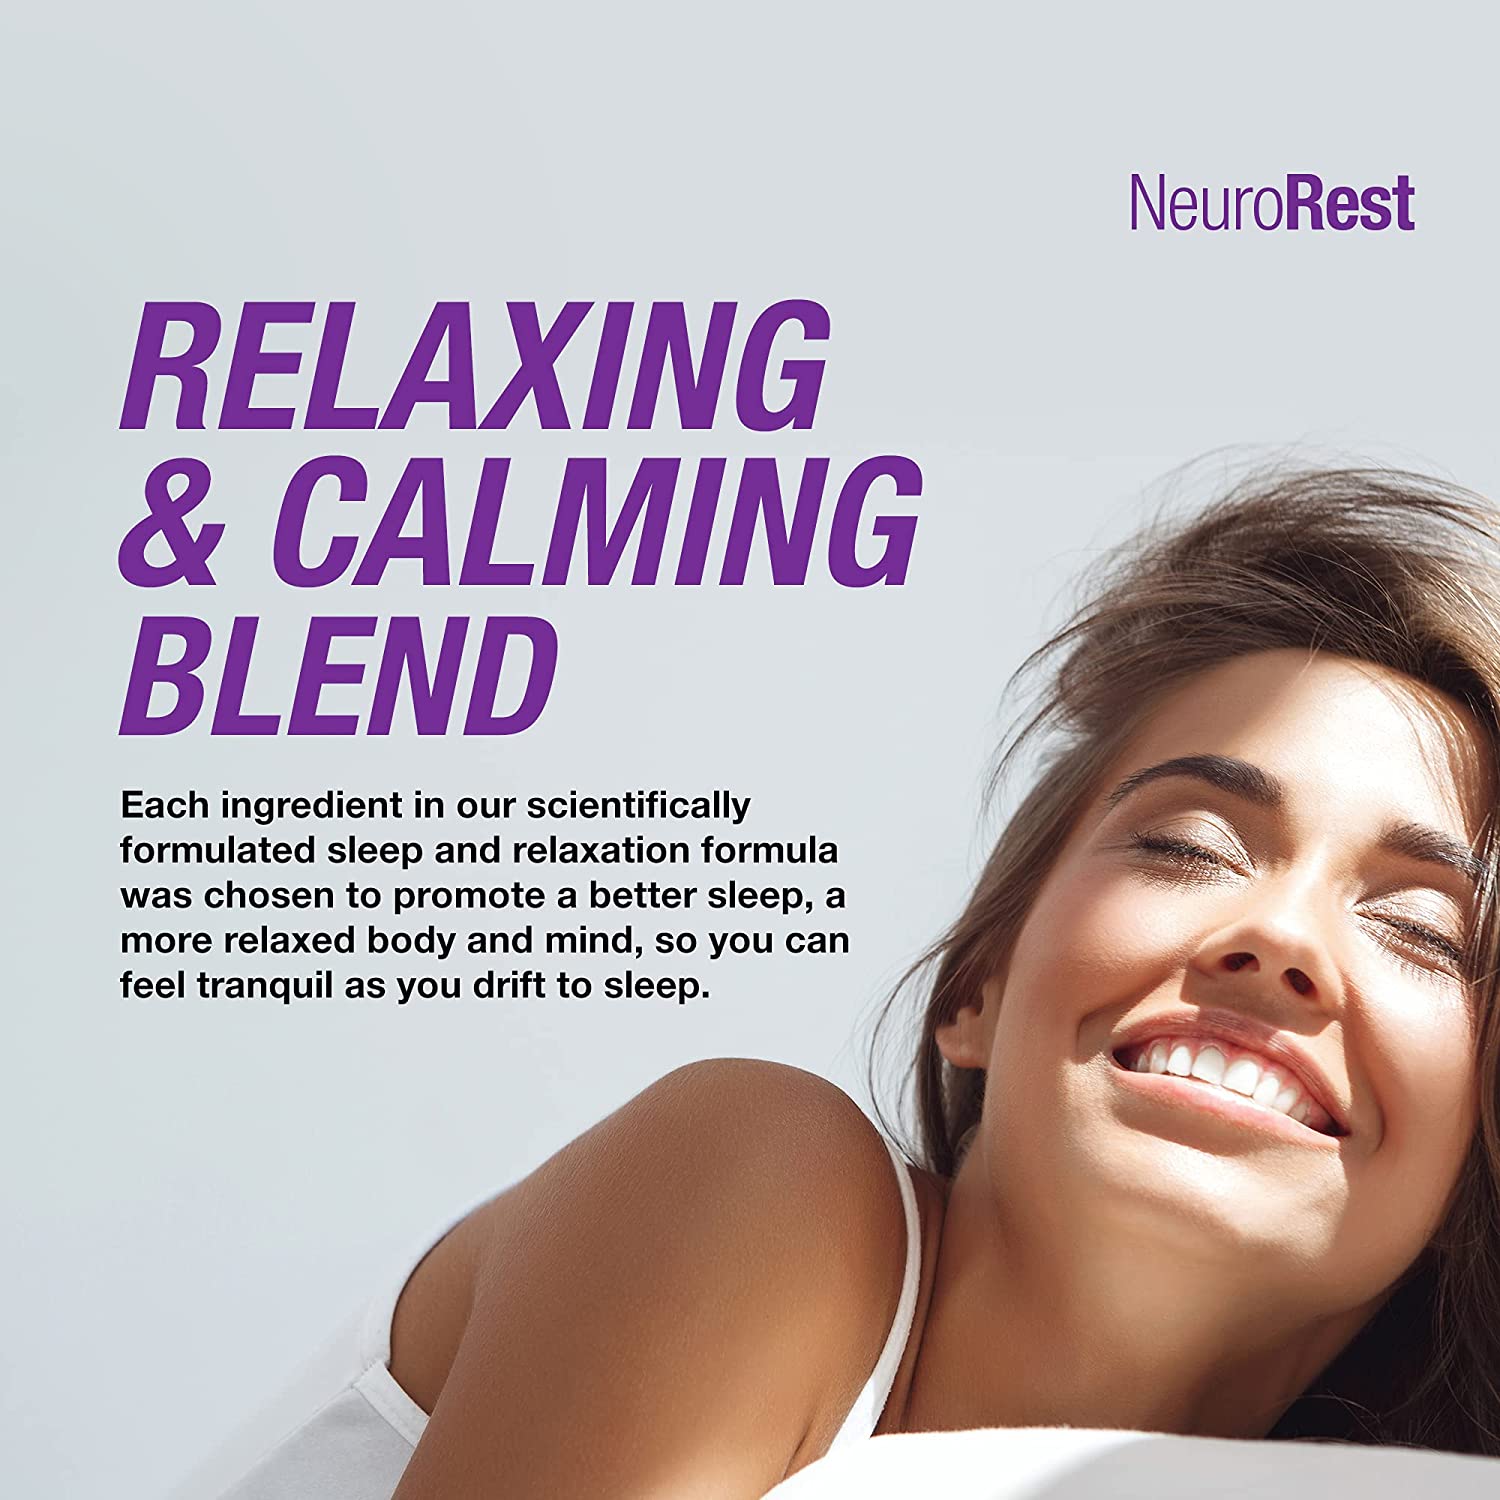 NeuroRest - Proprietary Sleep Formula